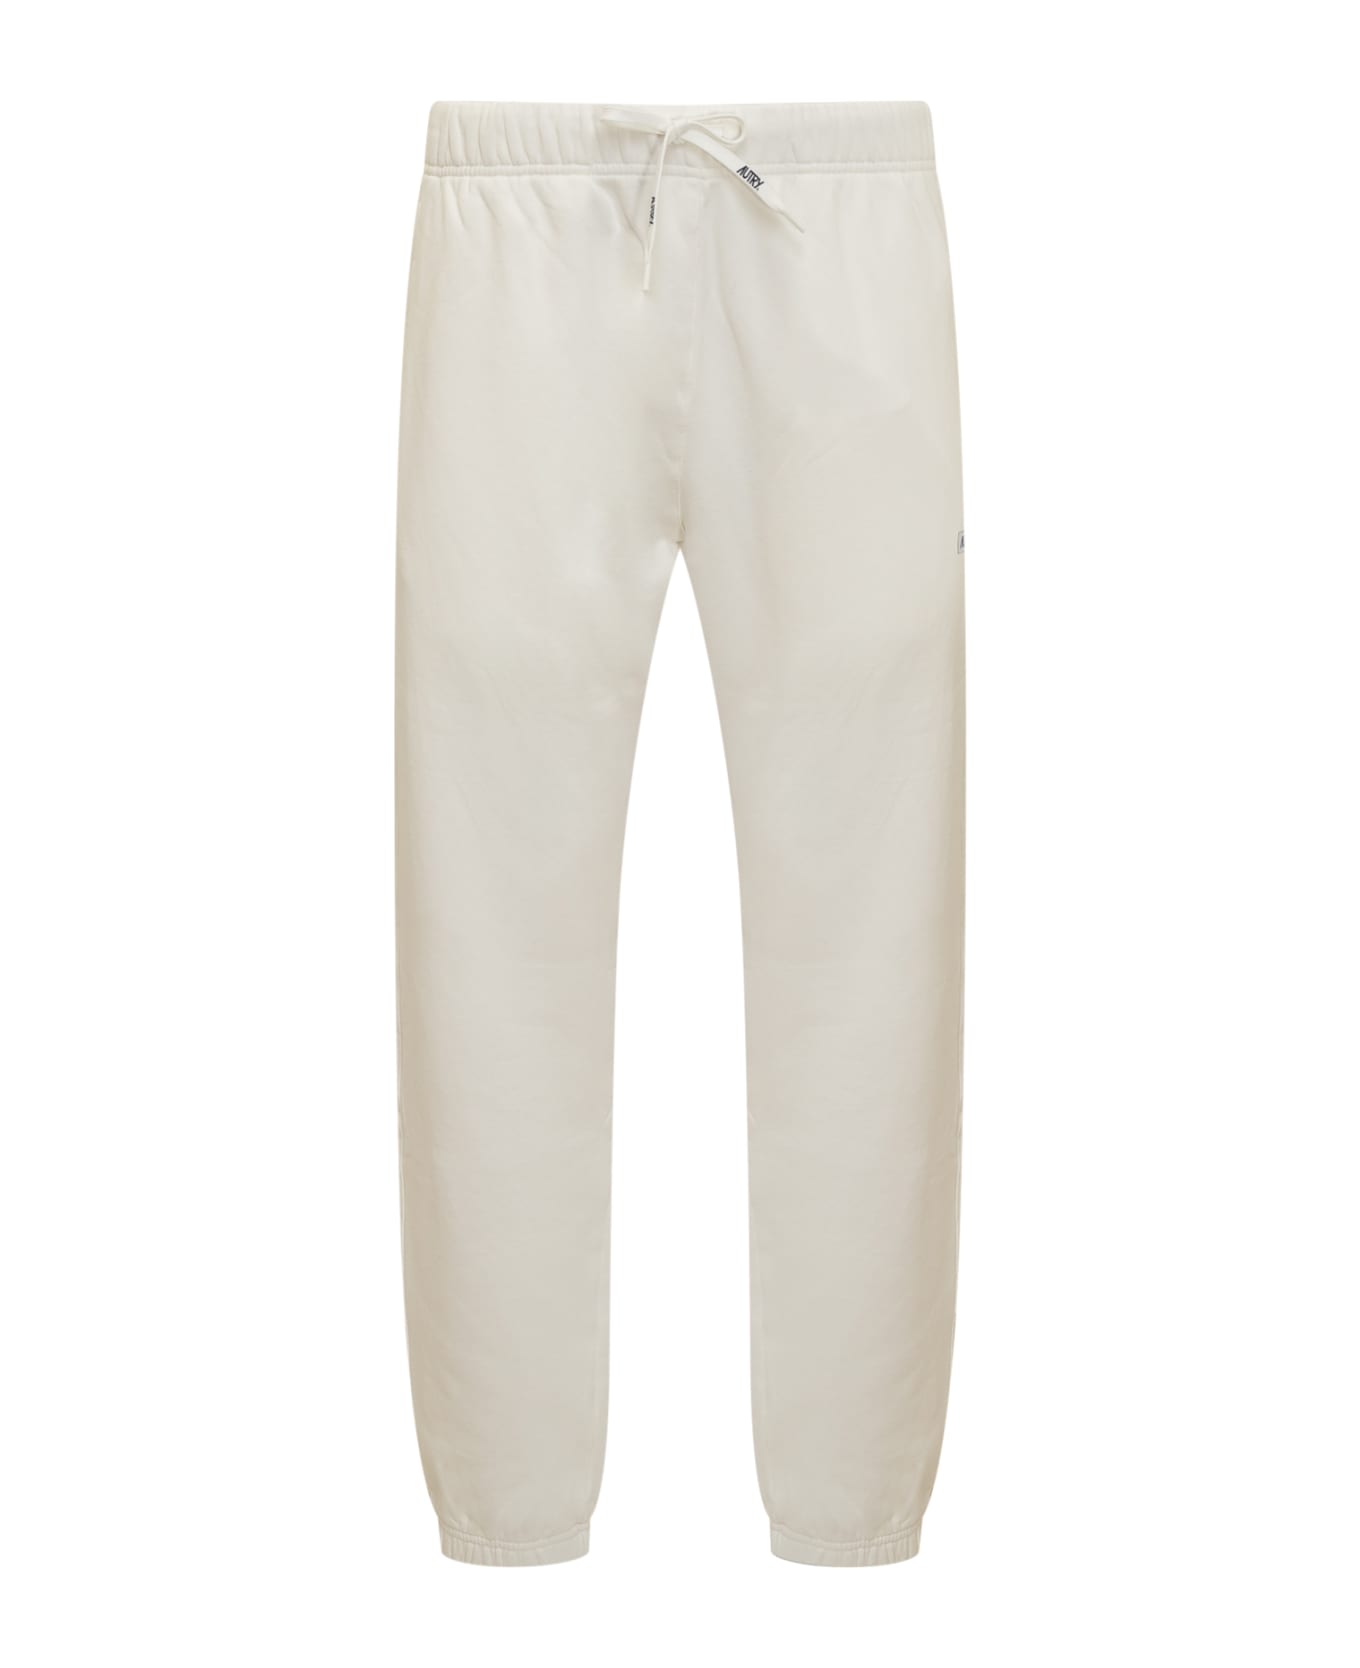 Autry Cotton Jogging Pants With Logo - APPAREL WHITE